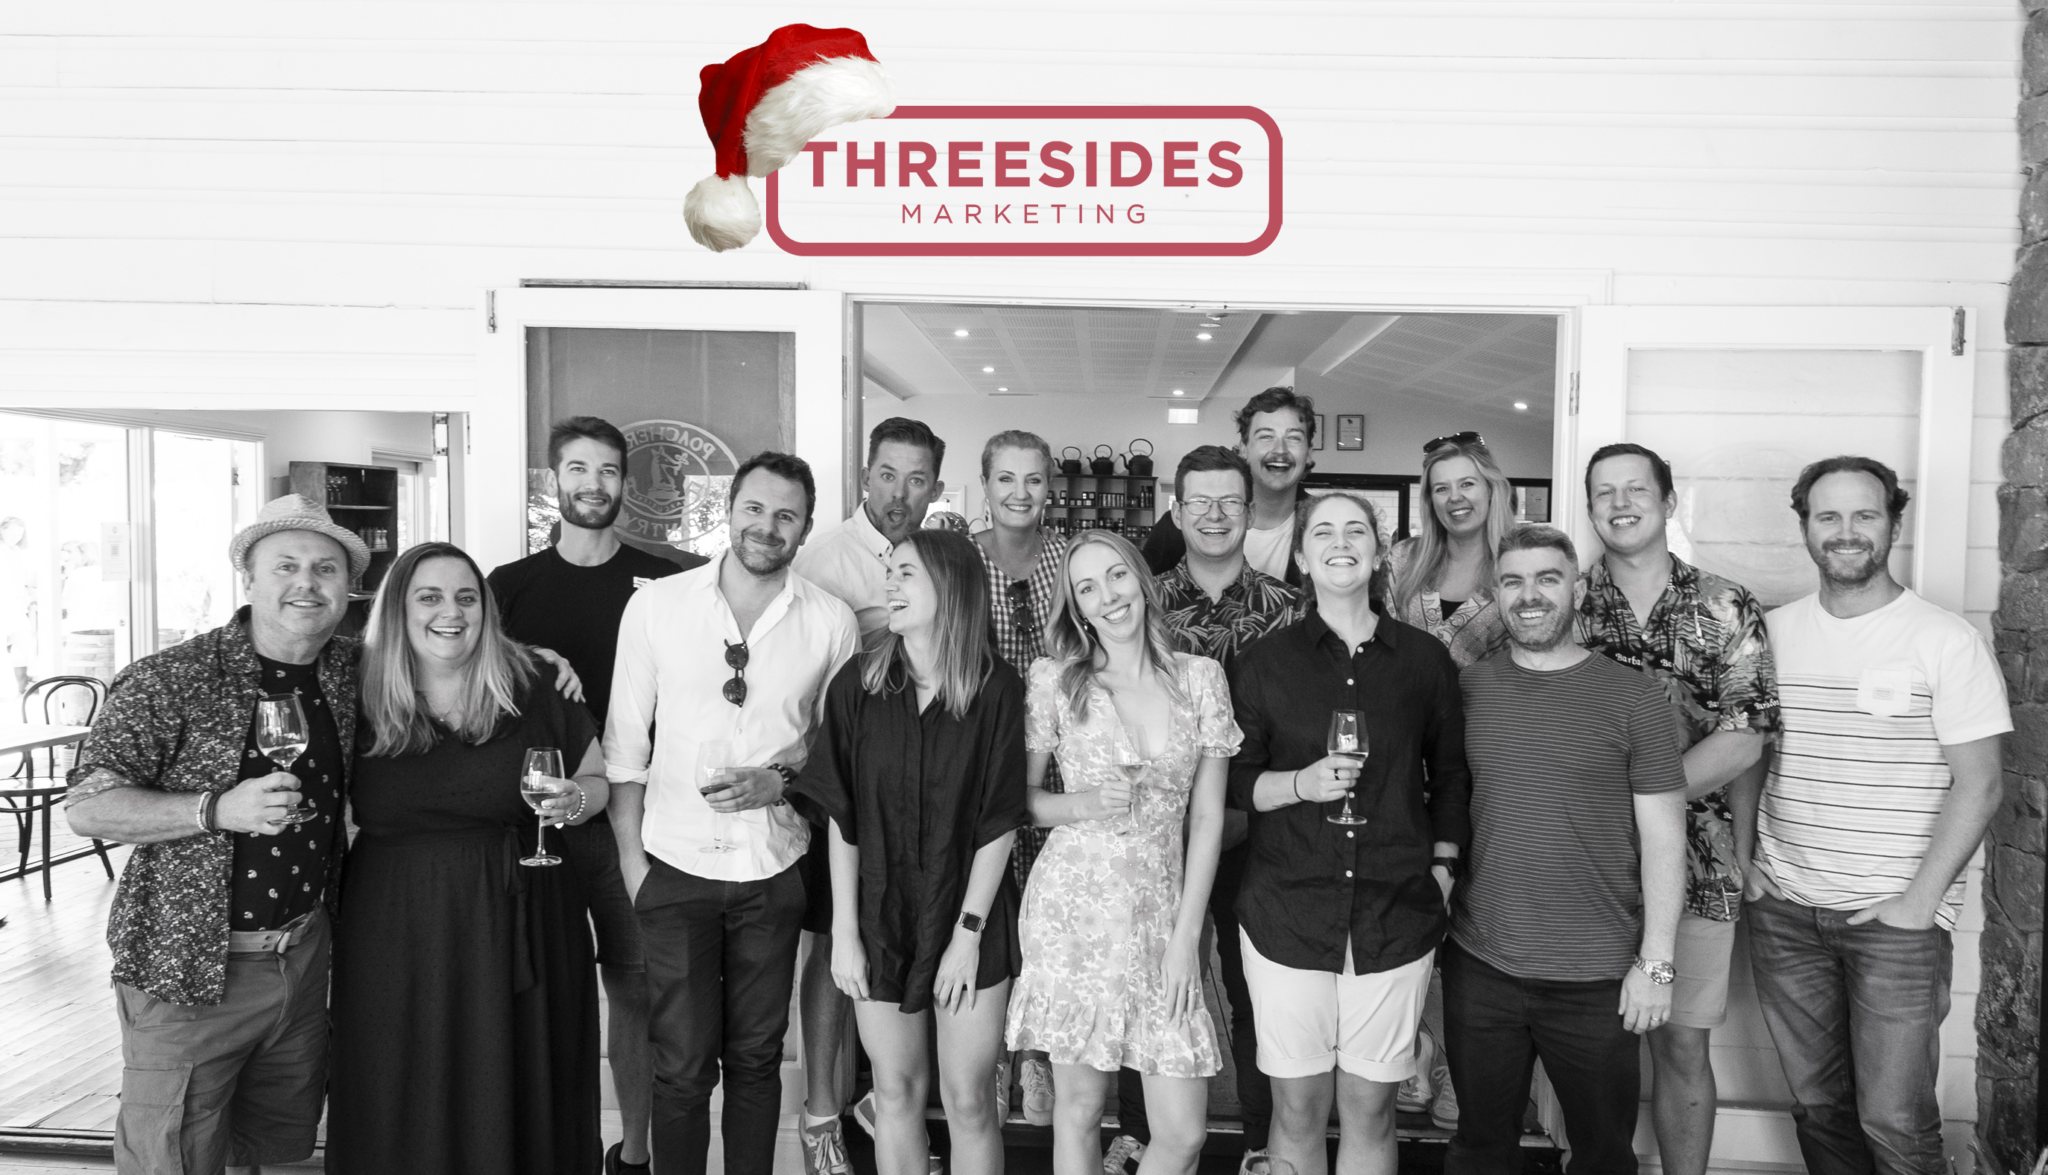 Happy Holidays from Threesides